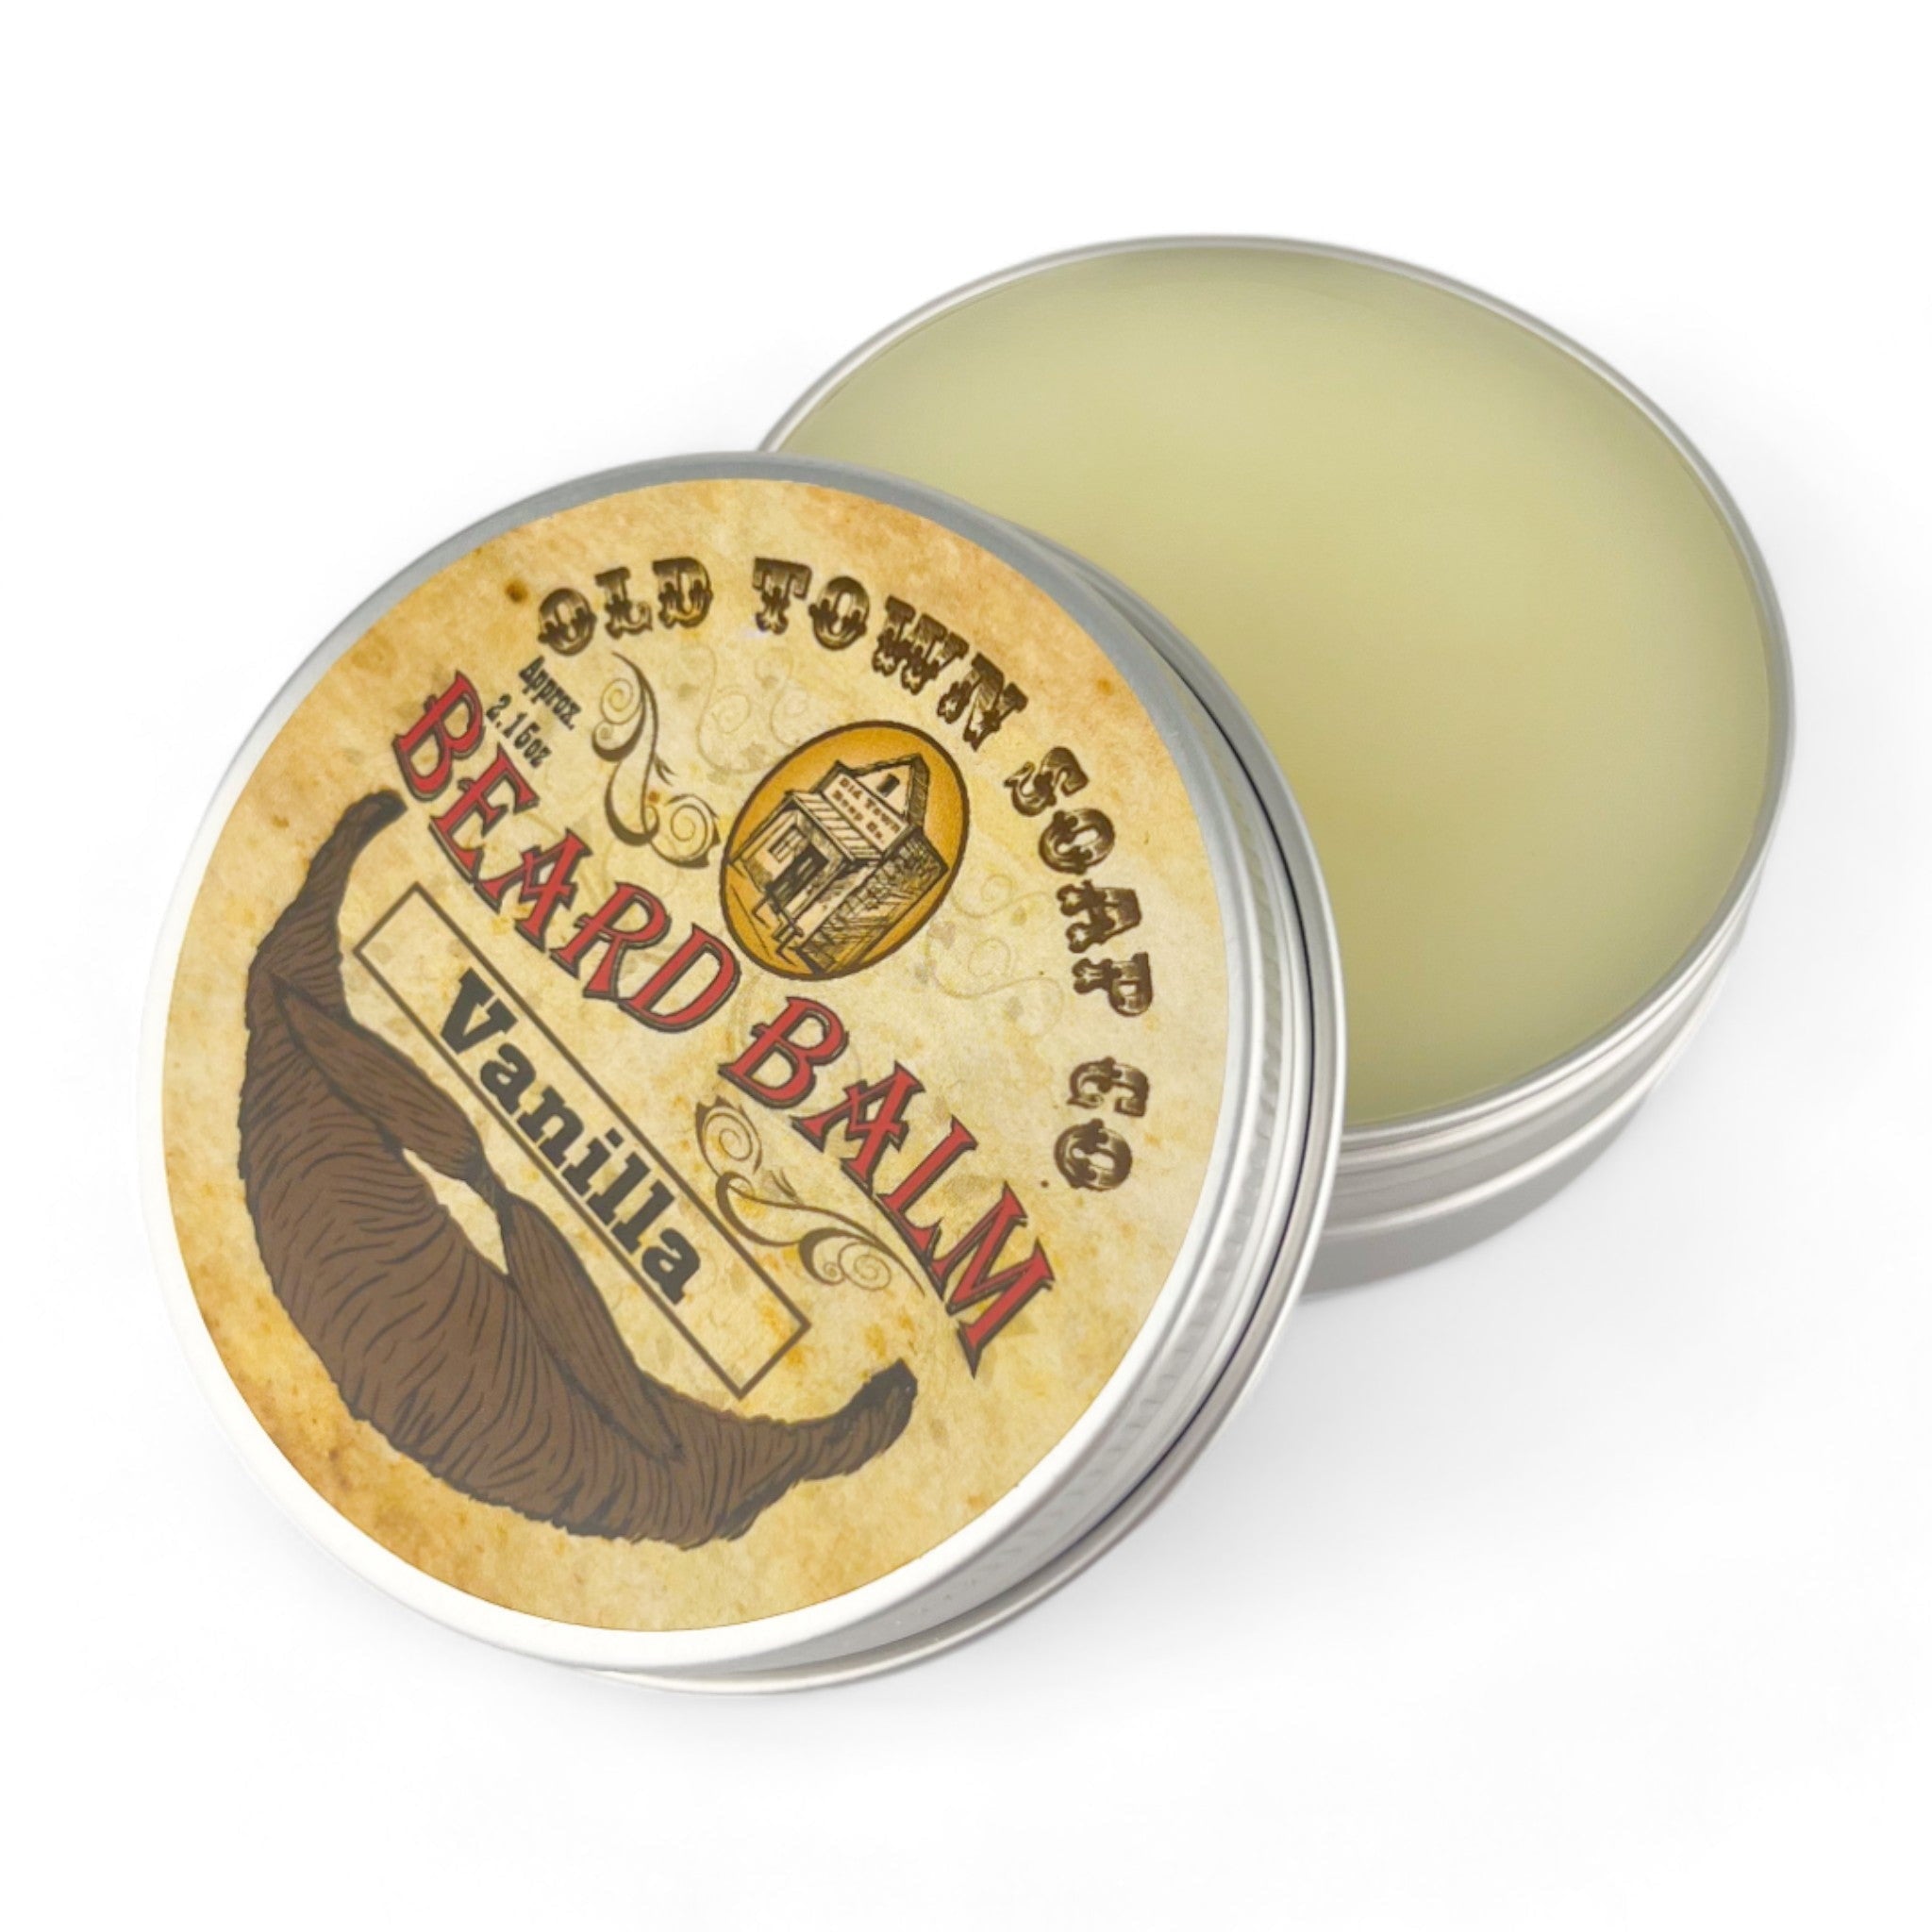 Vanilla Beard Balm - Old Town Soap Co.